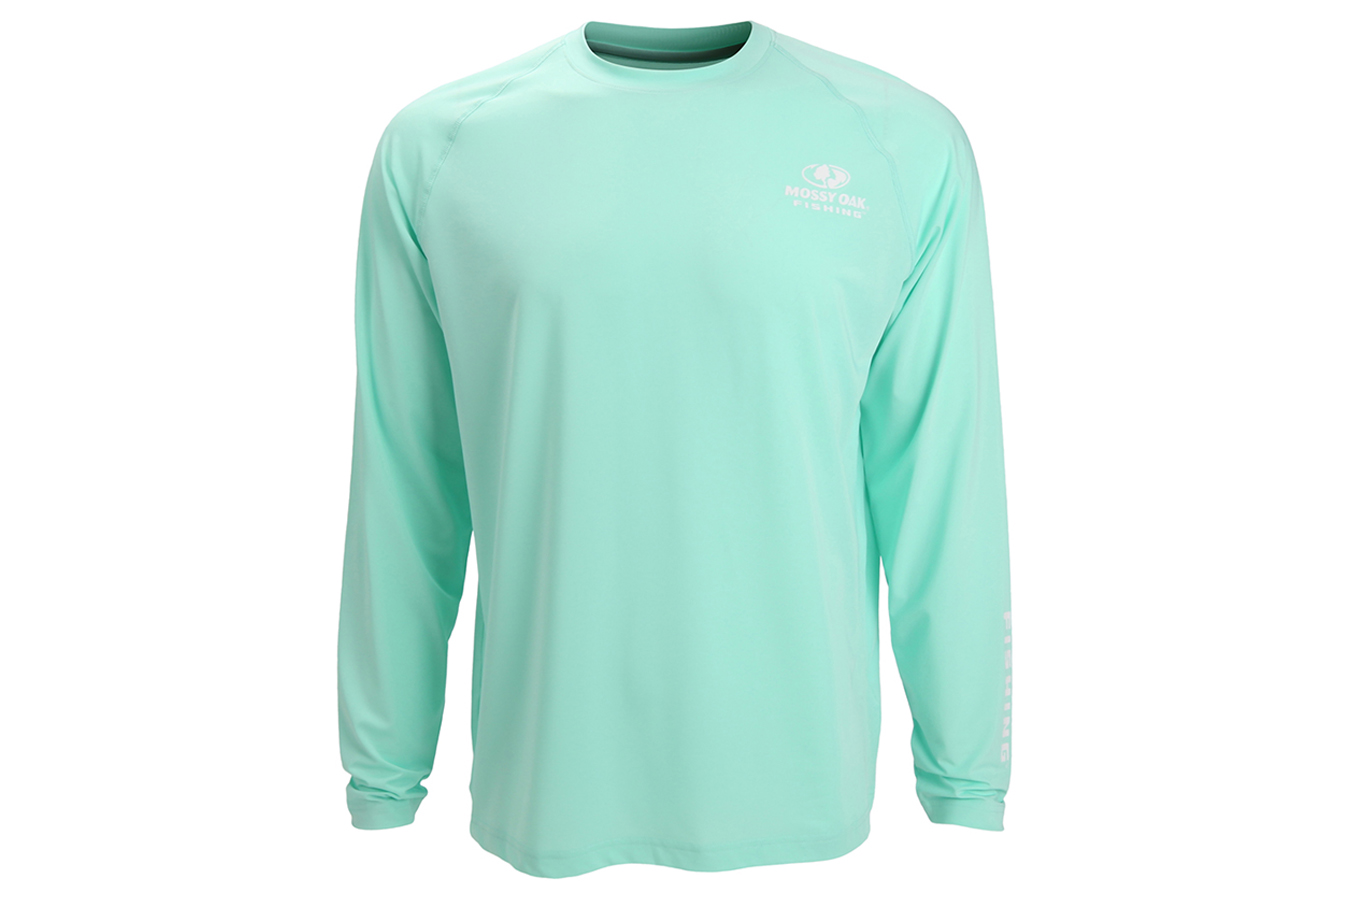 Paramount Apparel Mossy Oak Ultra-Light Long Sleeve Coastal Fishing Shirt  for Sale, Online Clothing Store